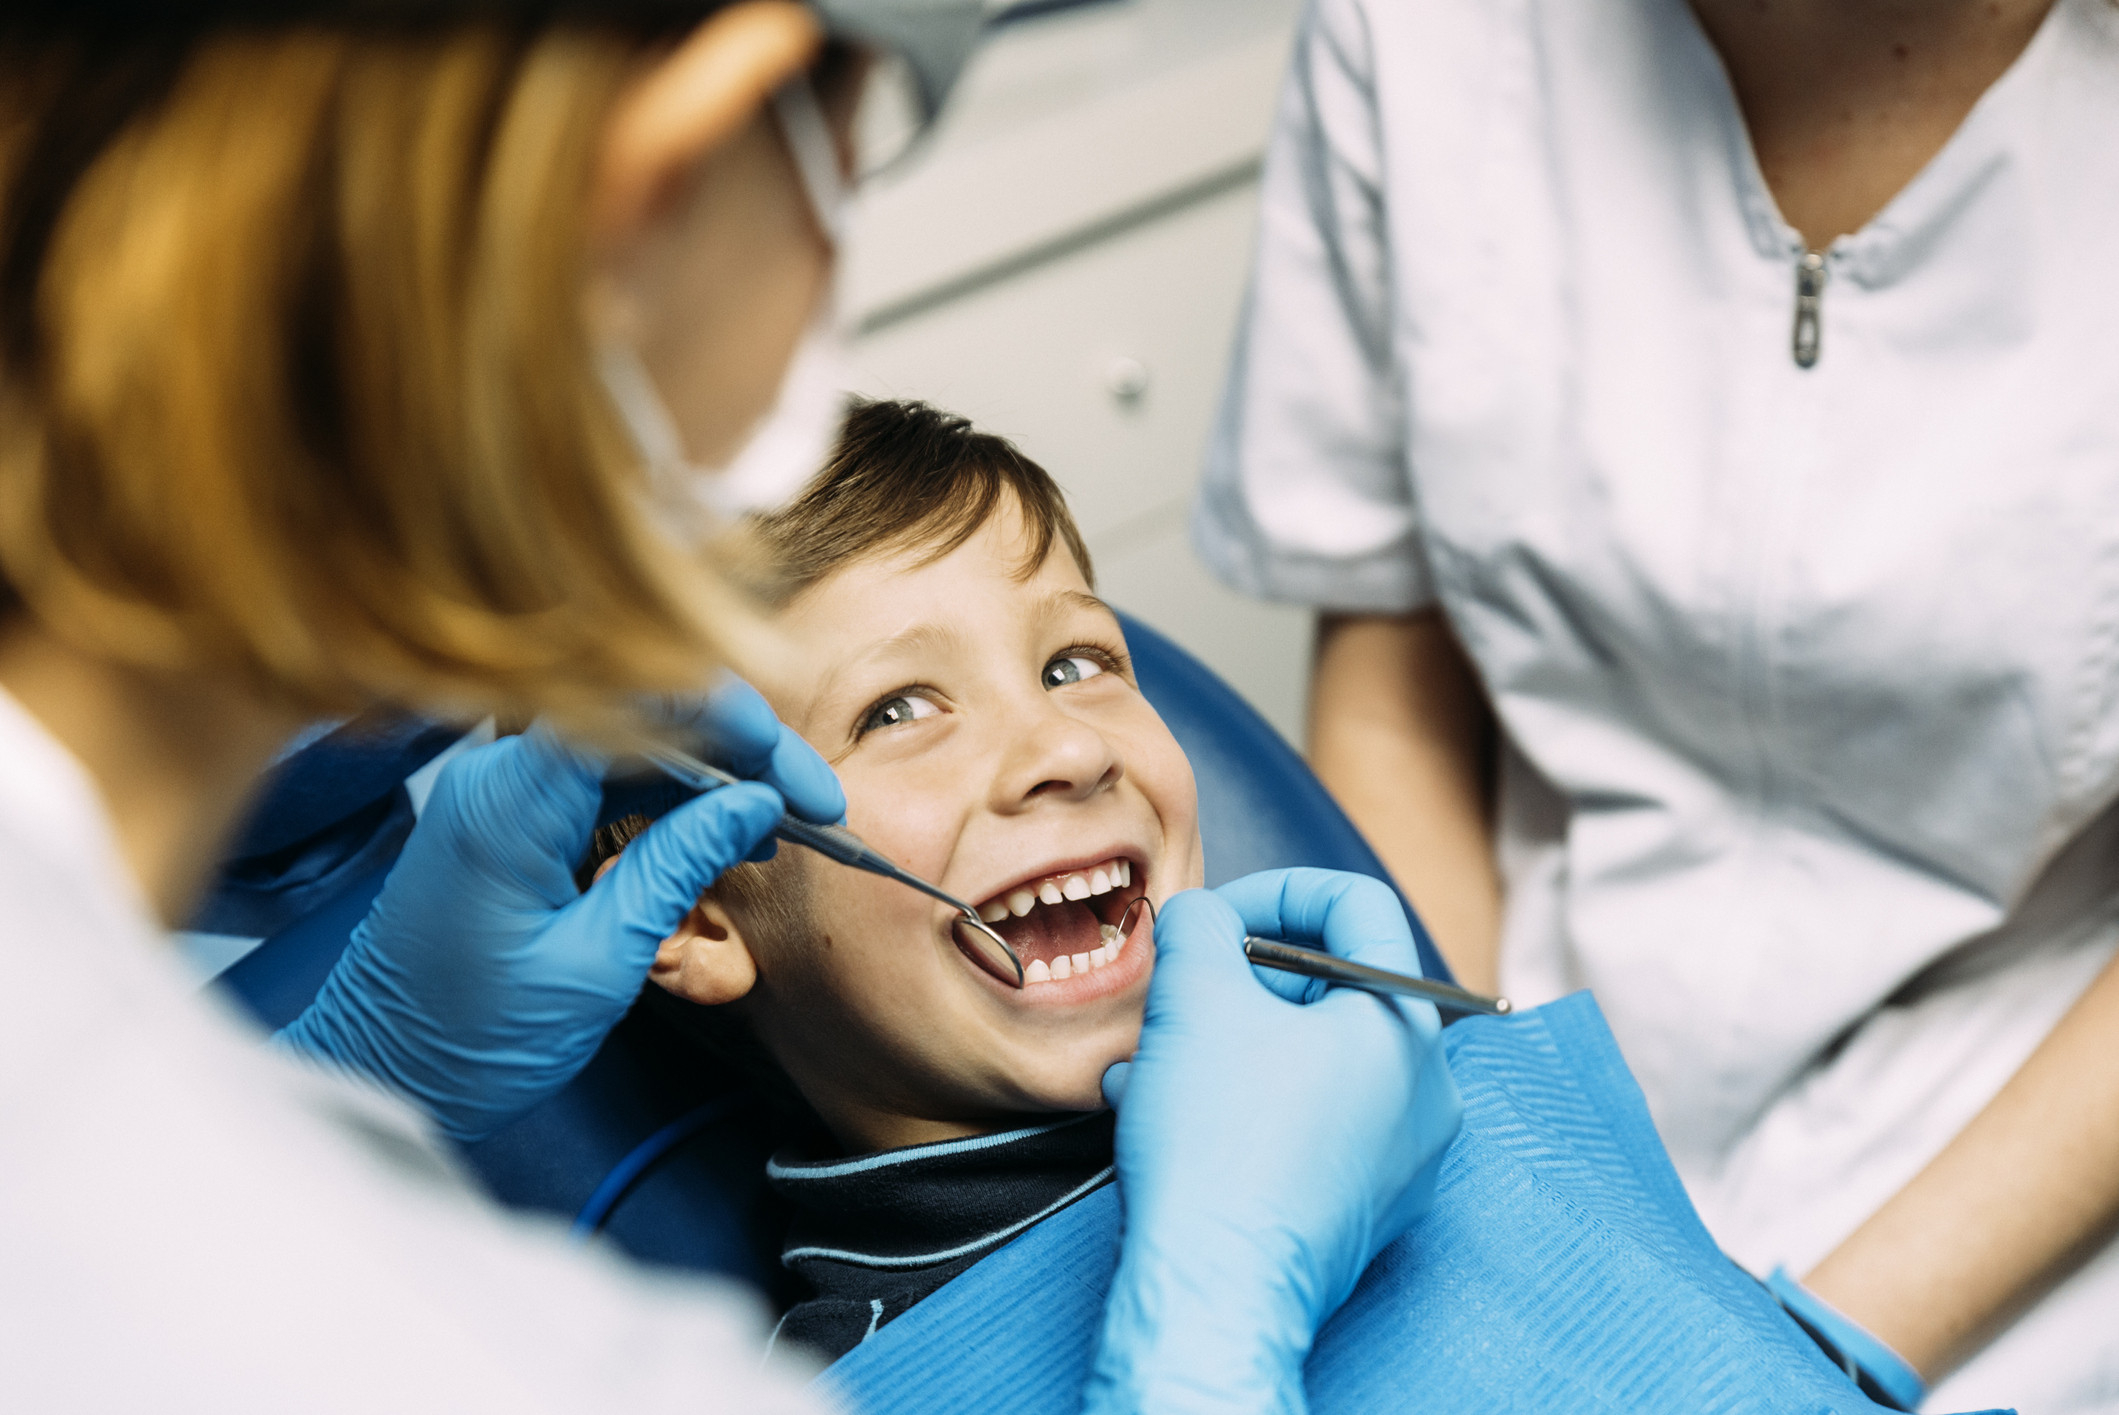 Dentist Pass: Δημοσιεύθηκε το ΦΕΚ για τον δωρεάν οδοντίατρο σε παιδιά – Πώς θα πάρετε το voucher